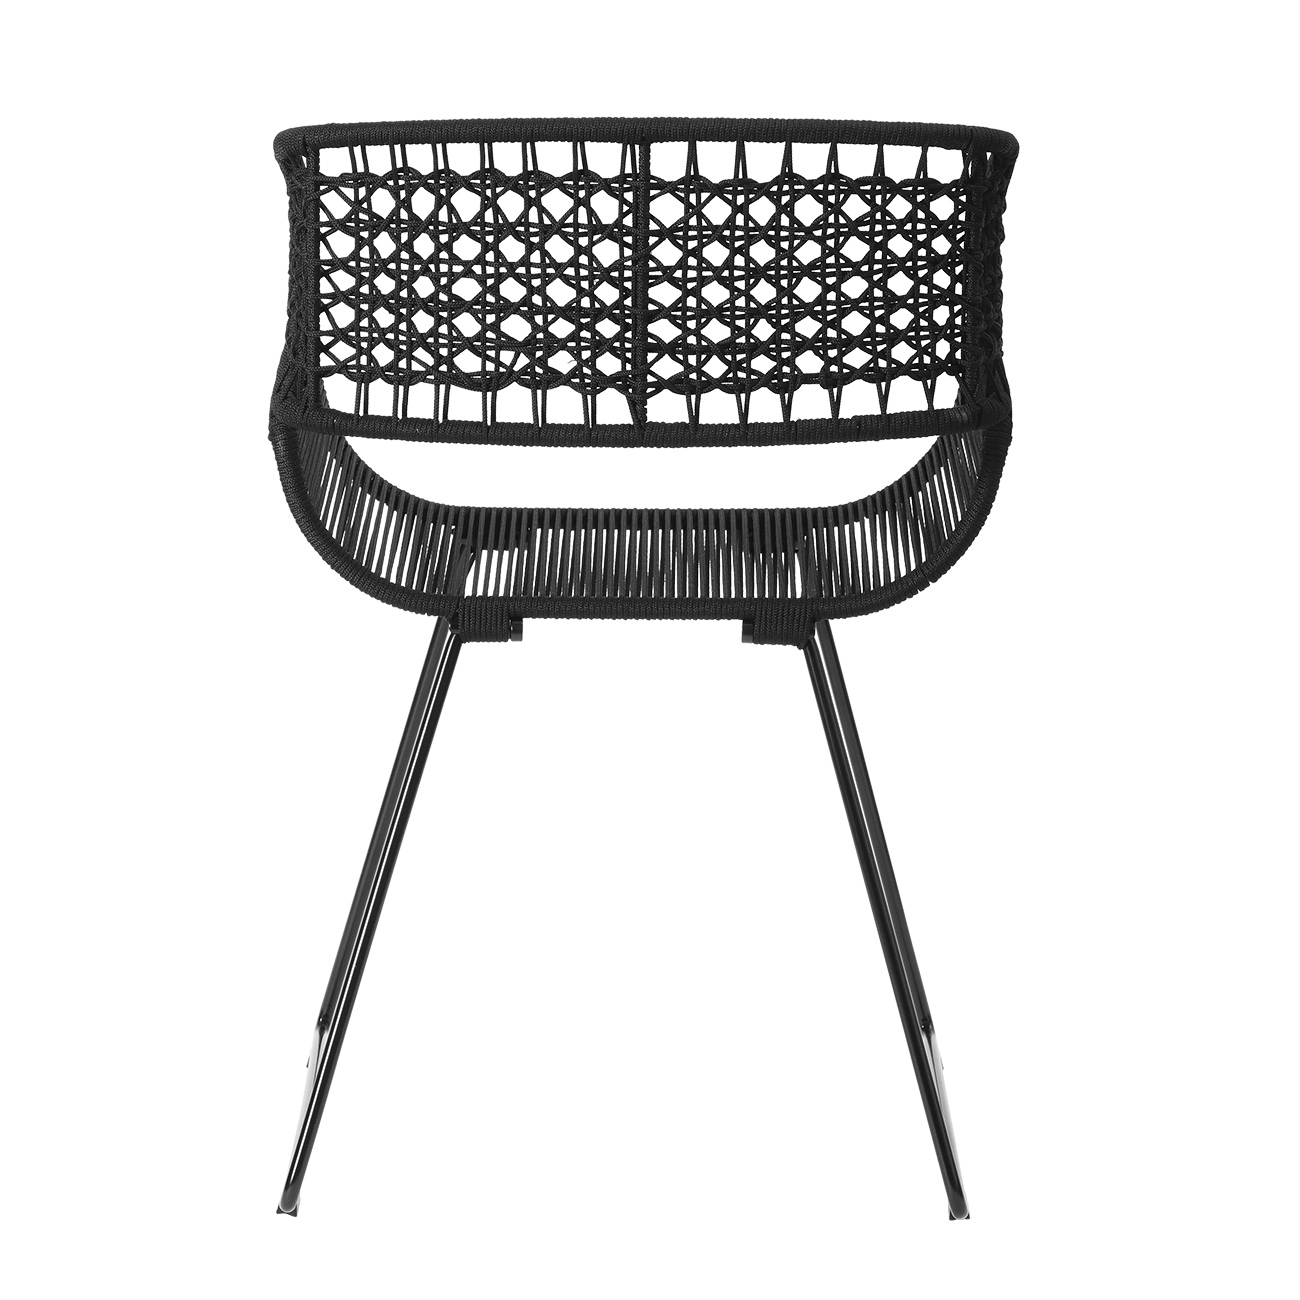 Exterior Garden Black Weave Chair Outdoor Modern Rattan Chair